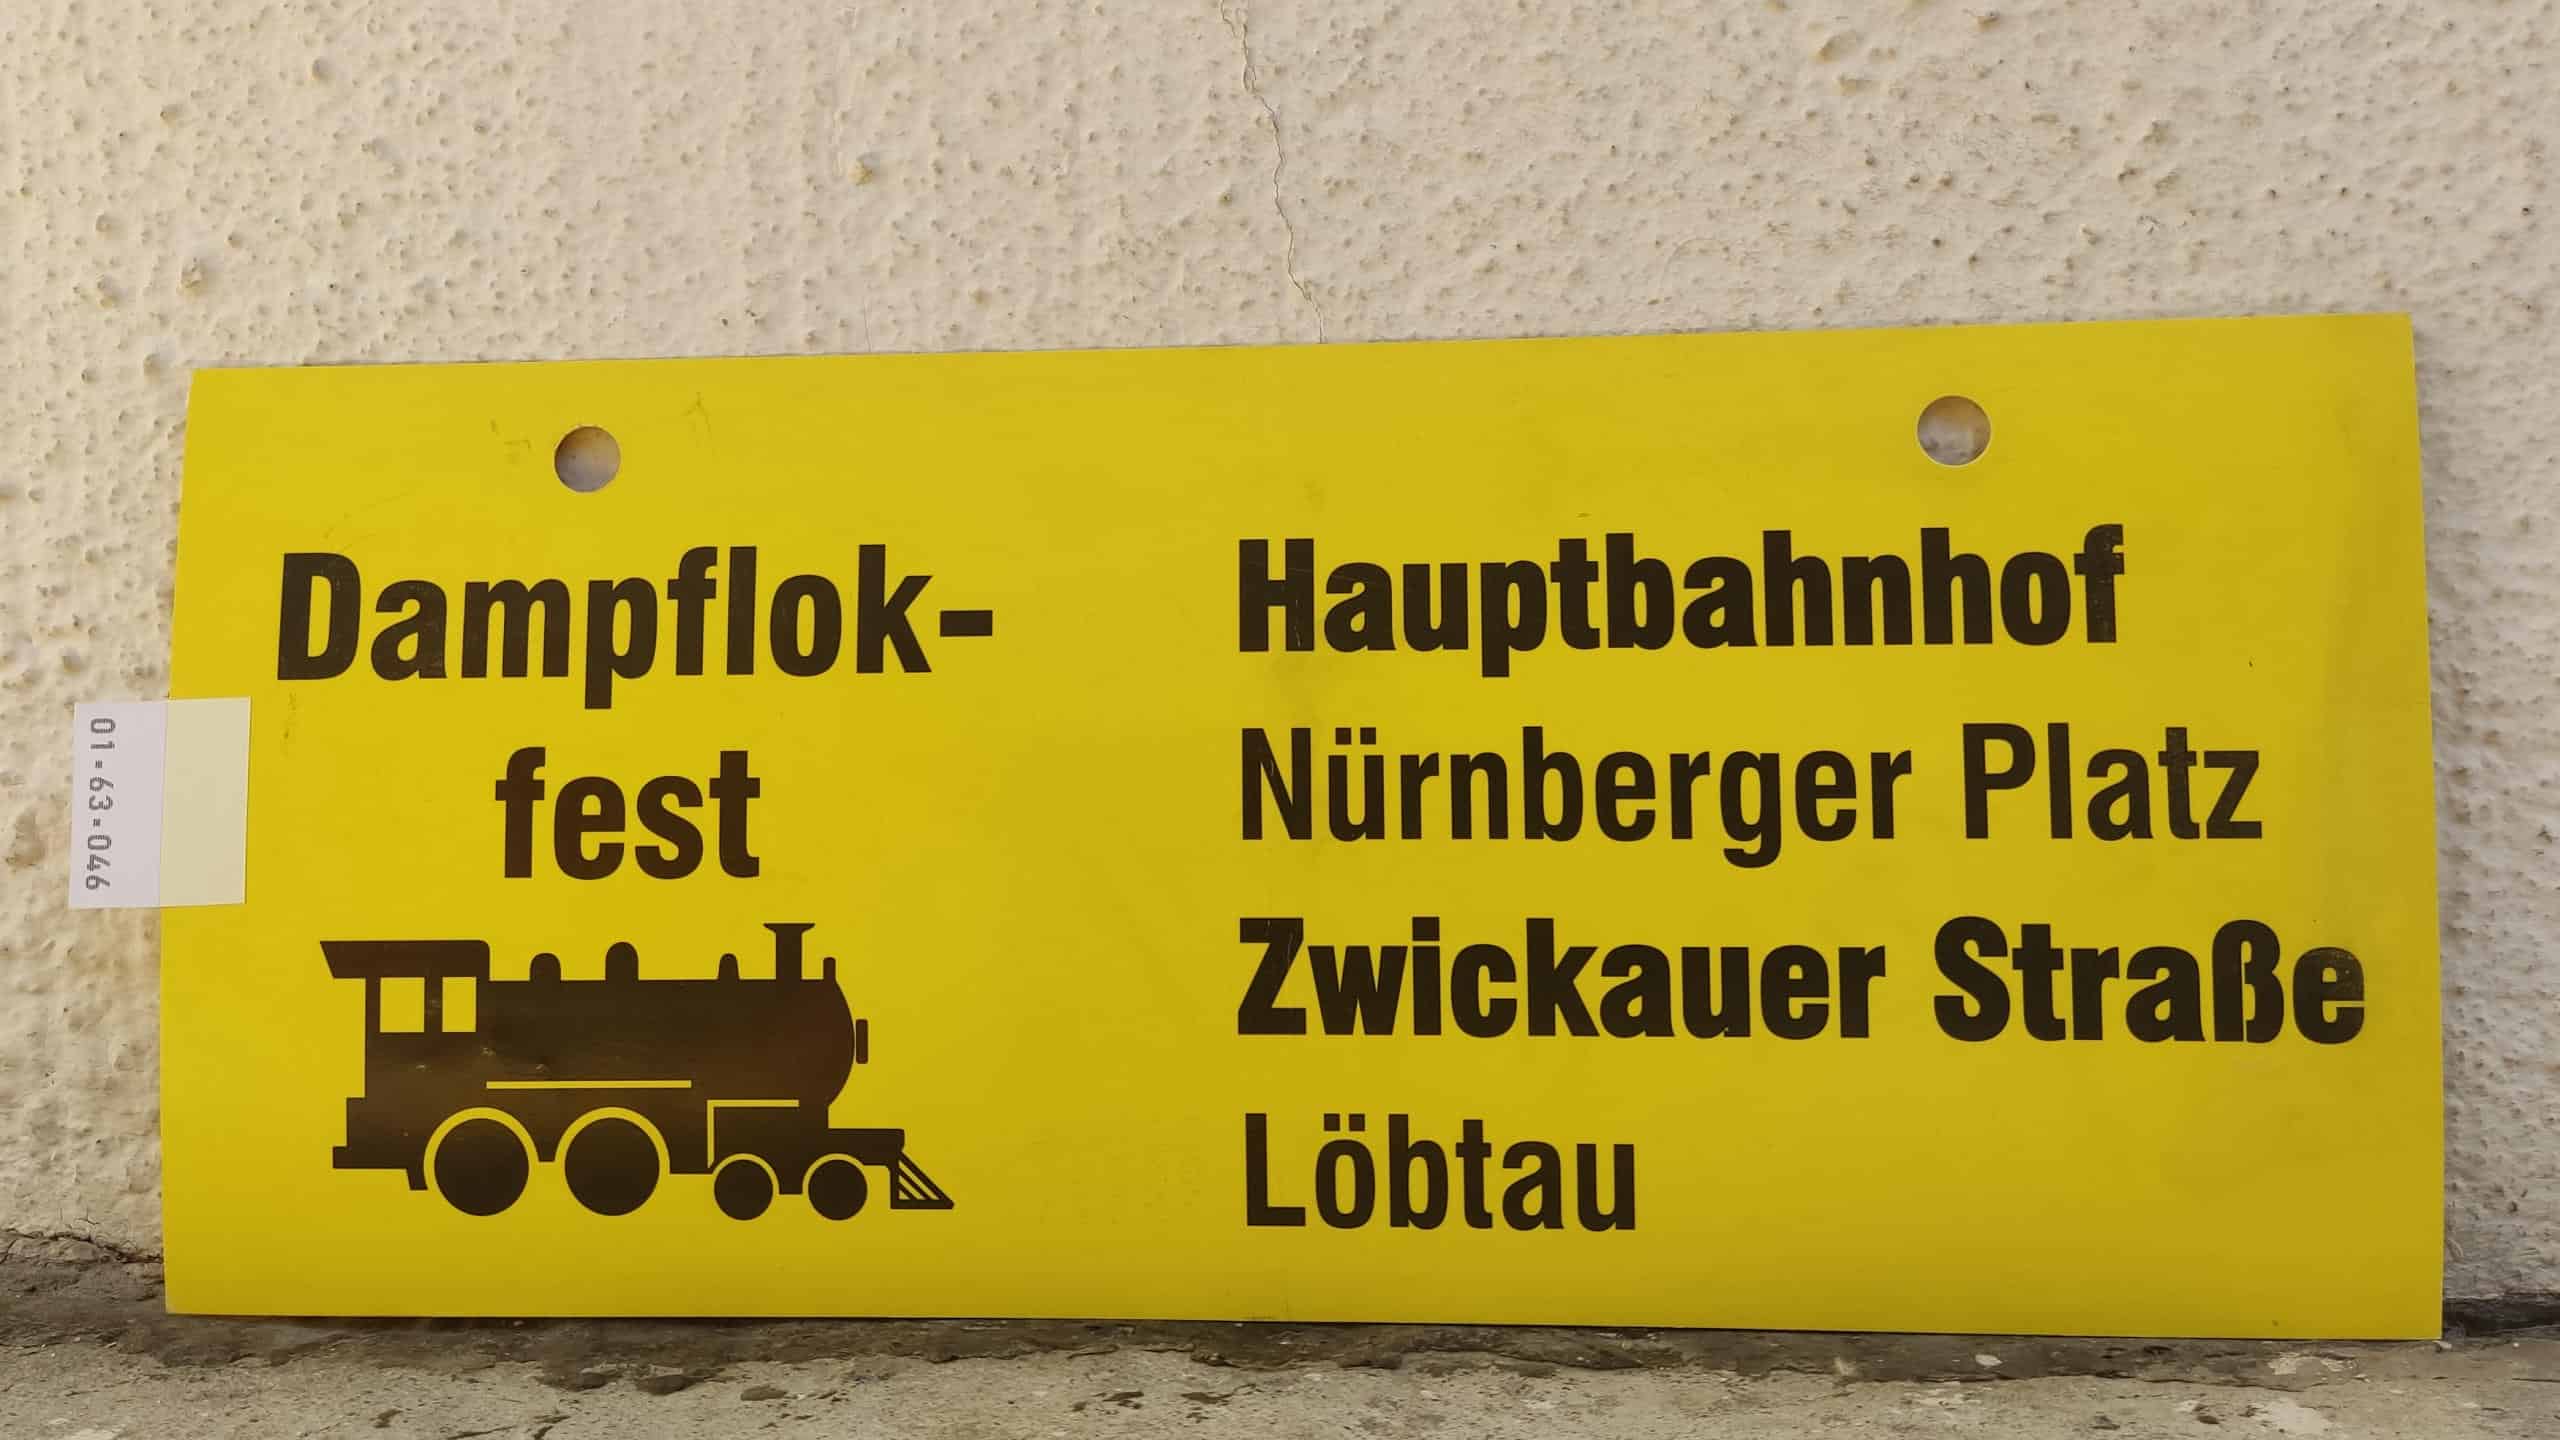 Dampflok- fest [Dampflok] Hauptbahnhof – Zwickauer Straße – Löbtau